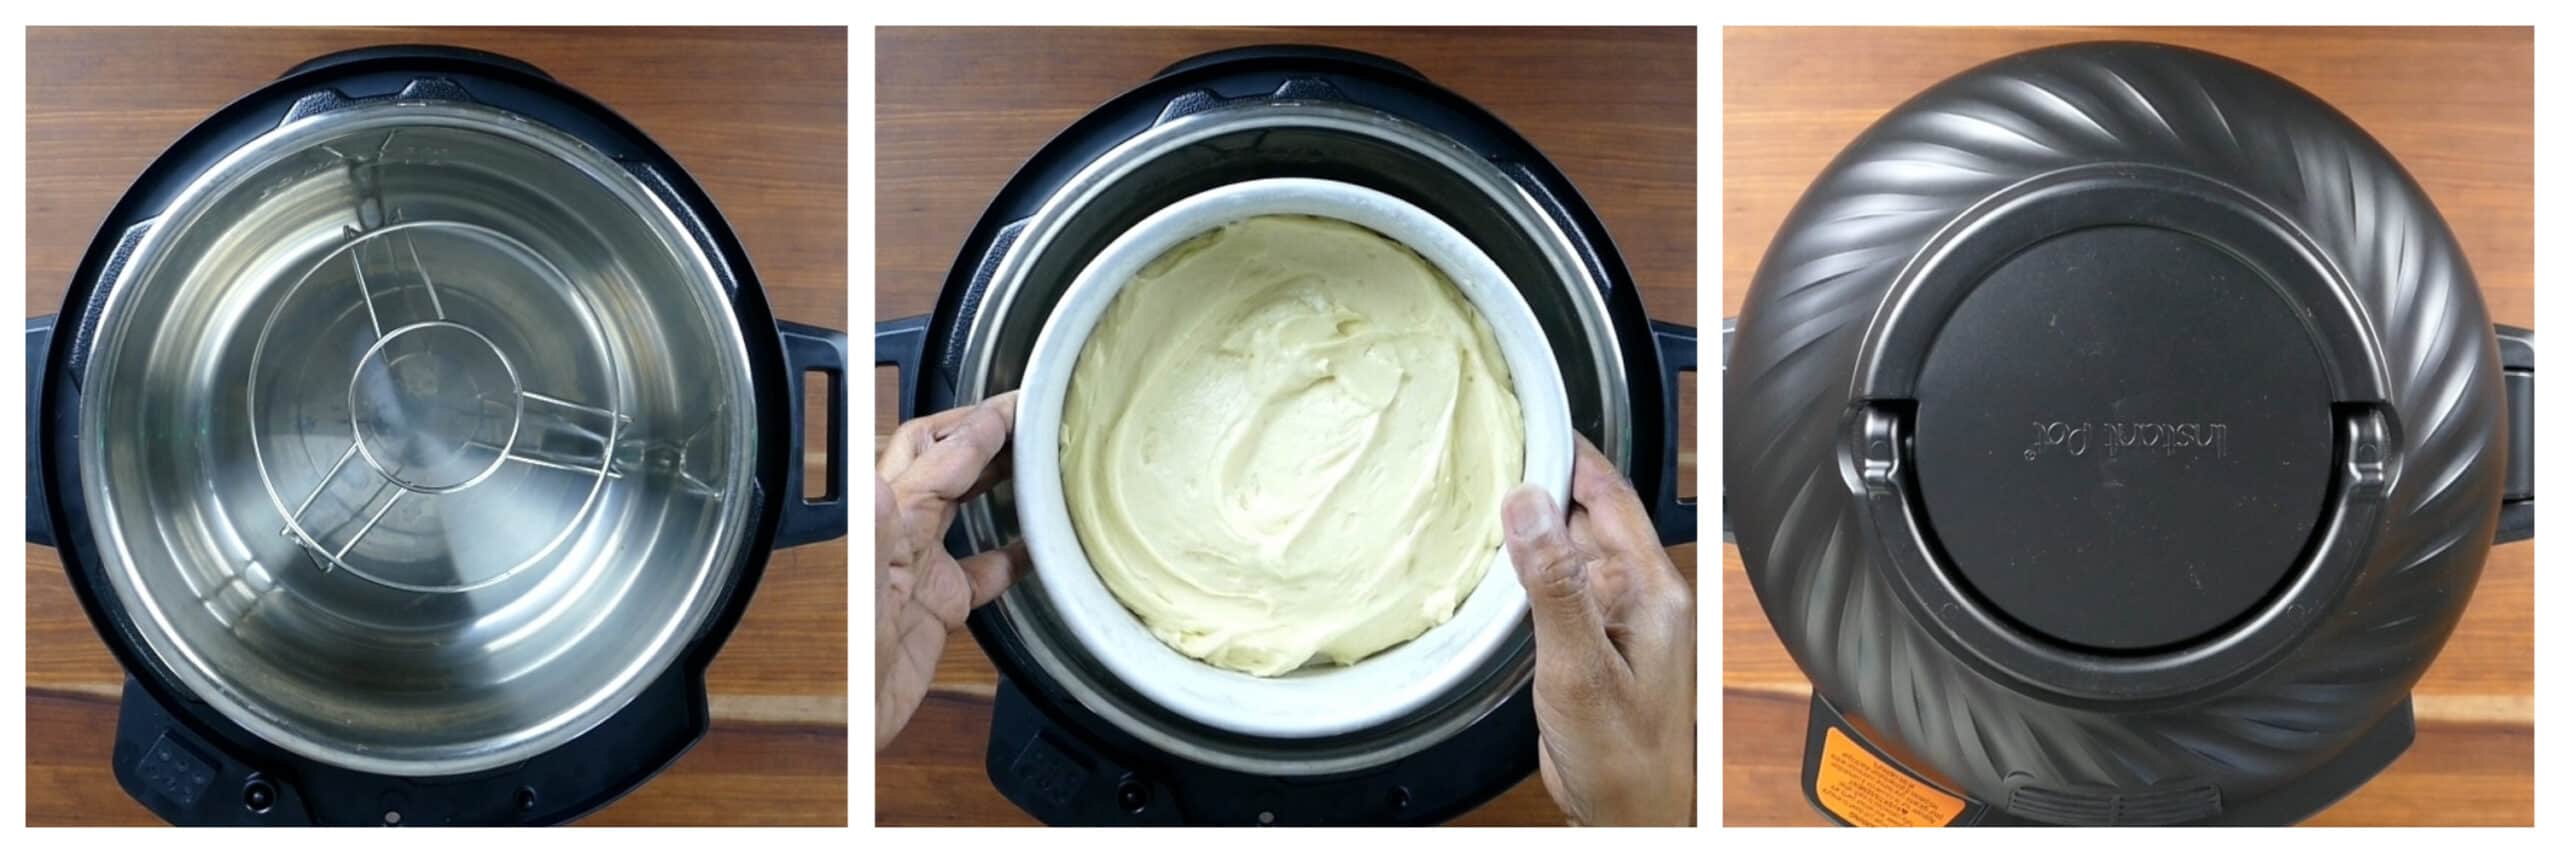 Instant Pot Air Fryer Pound Cake - rack in inner pot, cake pan on rack, cover with air fryer lid